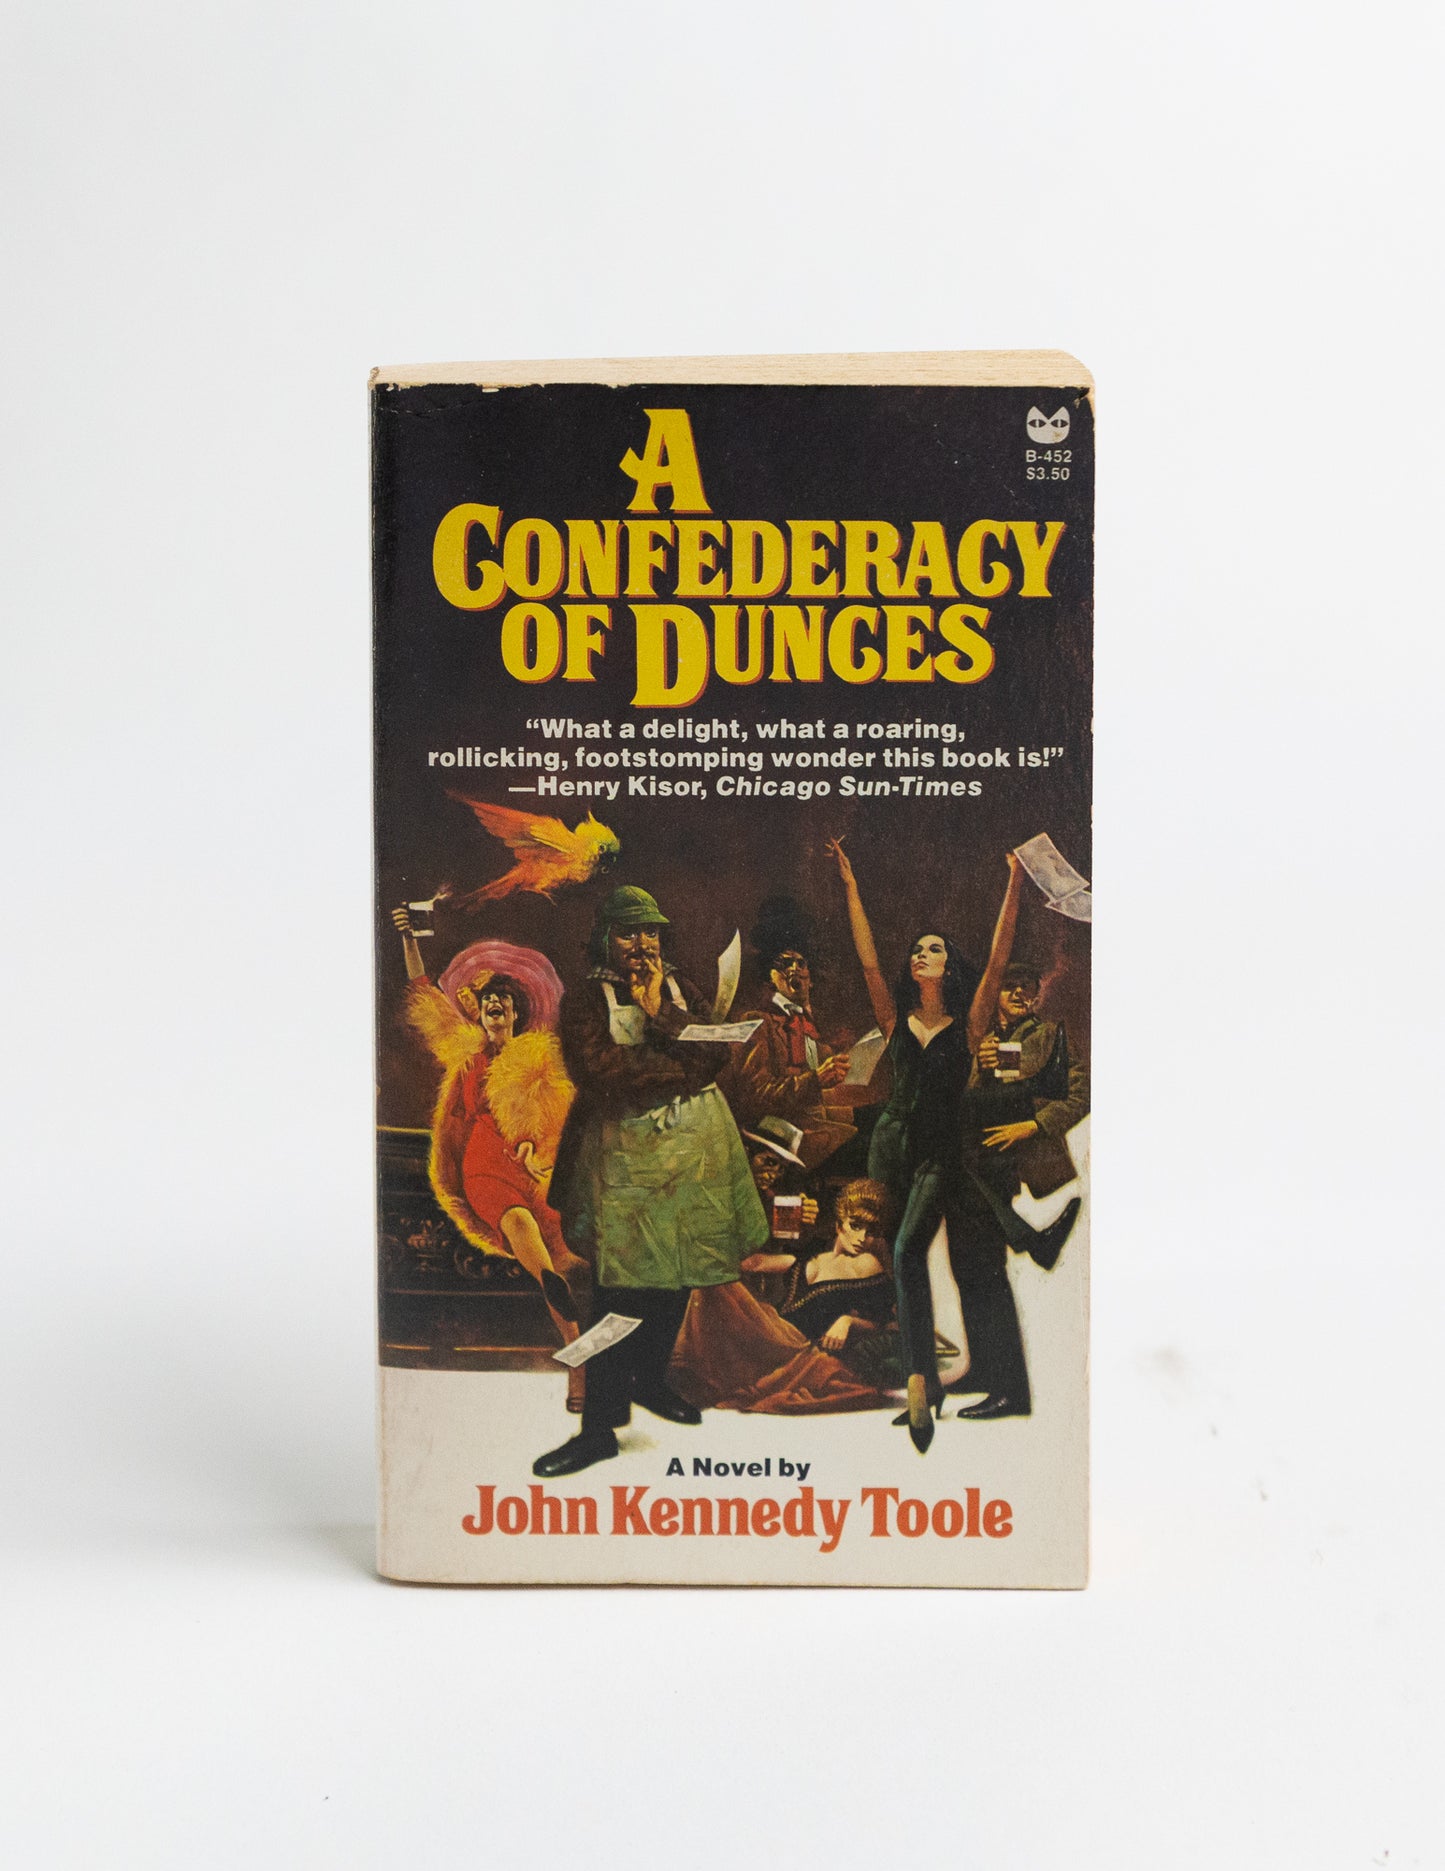 'A Confederacy of Dunces' by John Kennedy Toole